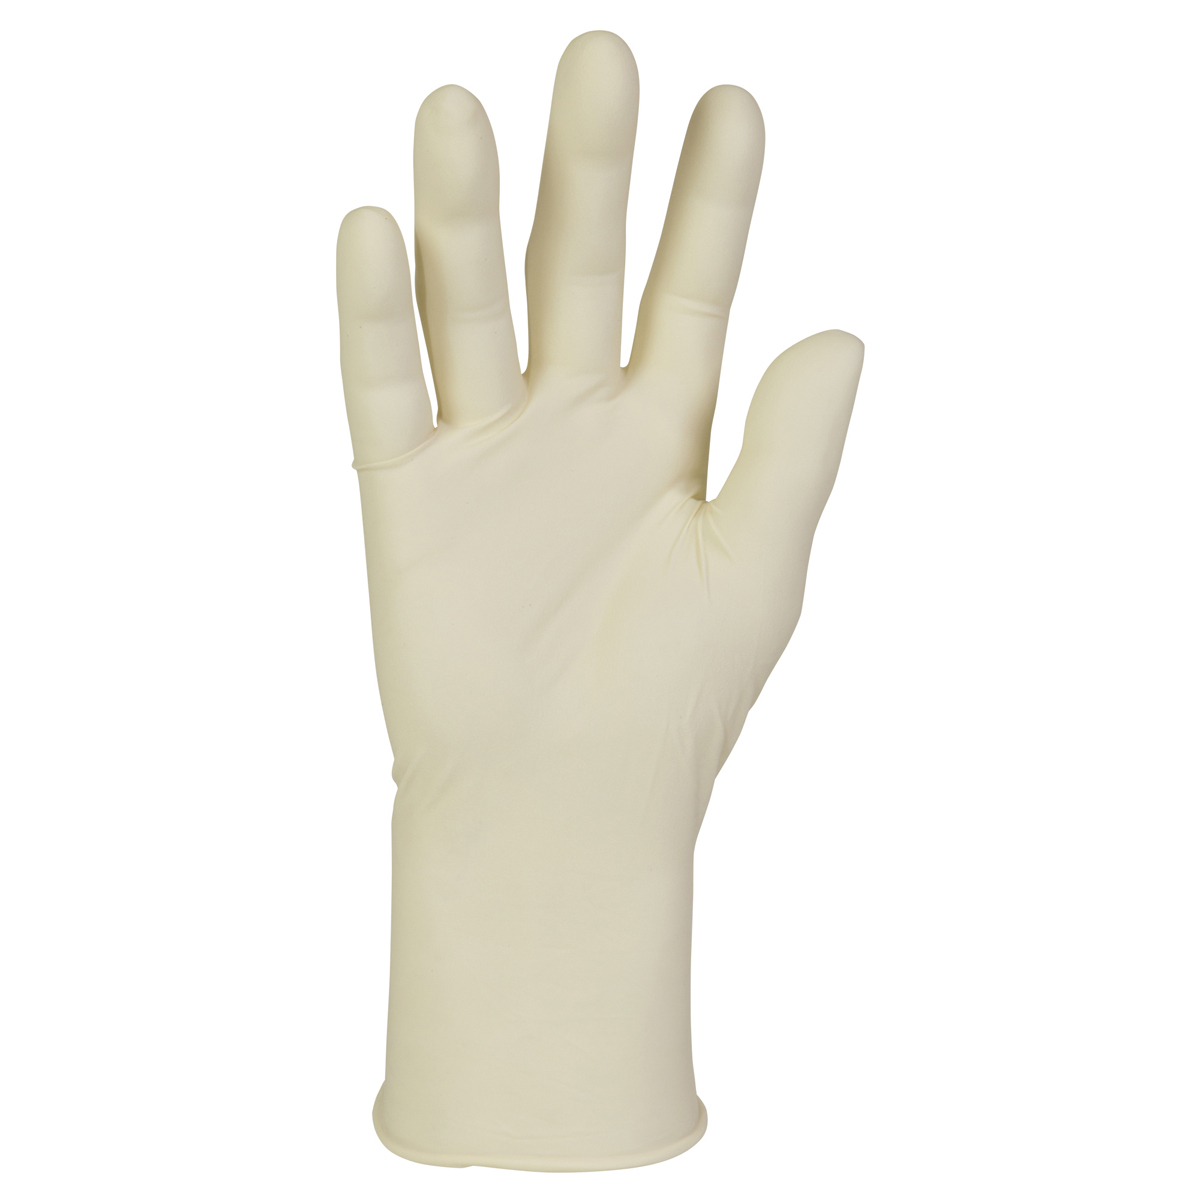 Kimberly-Clark Professional* Large Natural 6.7 mil PFE Latex Powder-Free Disposable Exam Gloves (100 Gloves Per Box) (Availabili